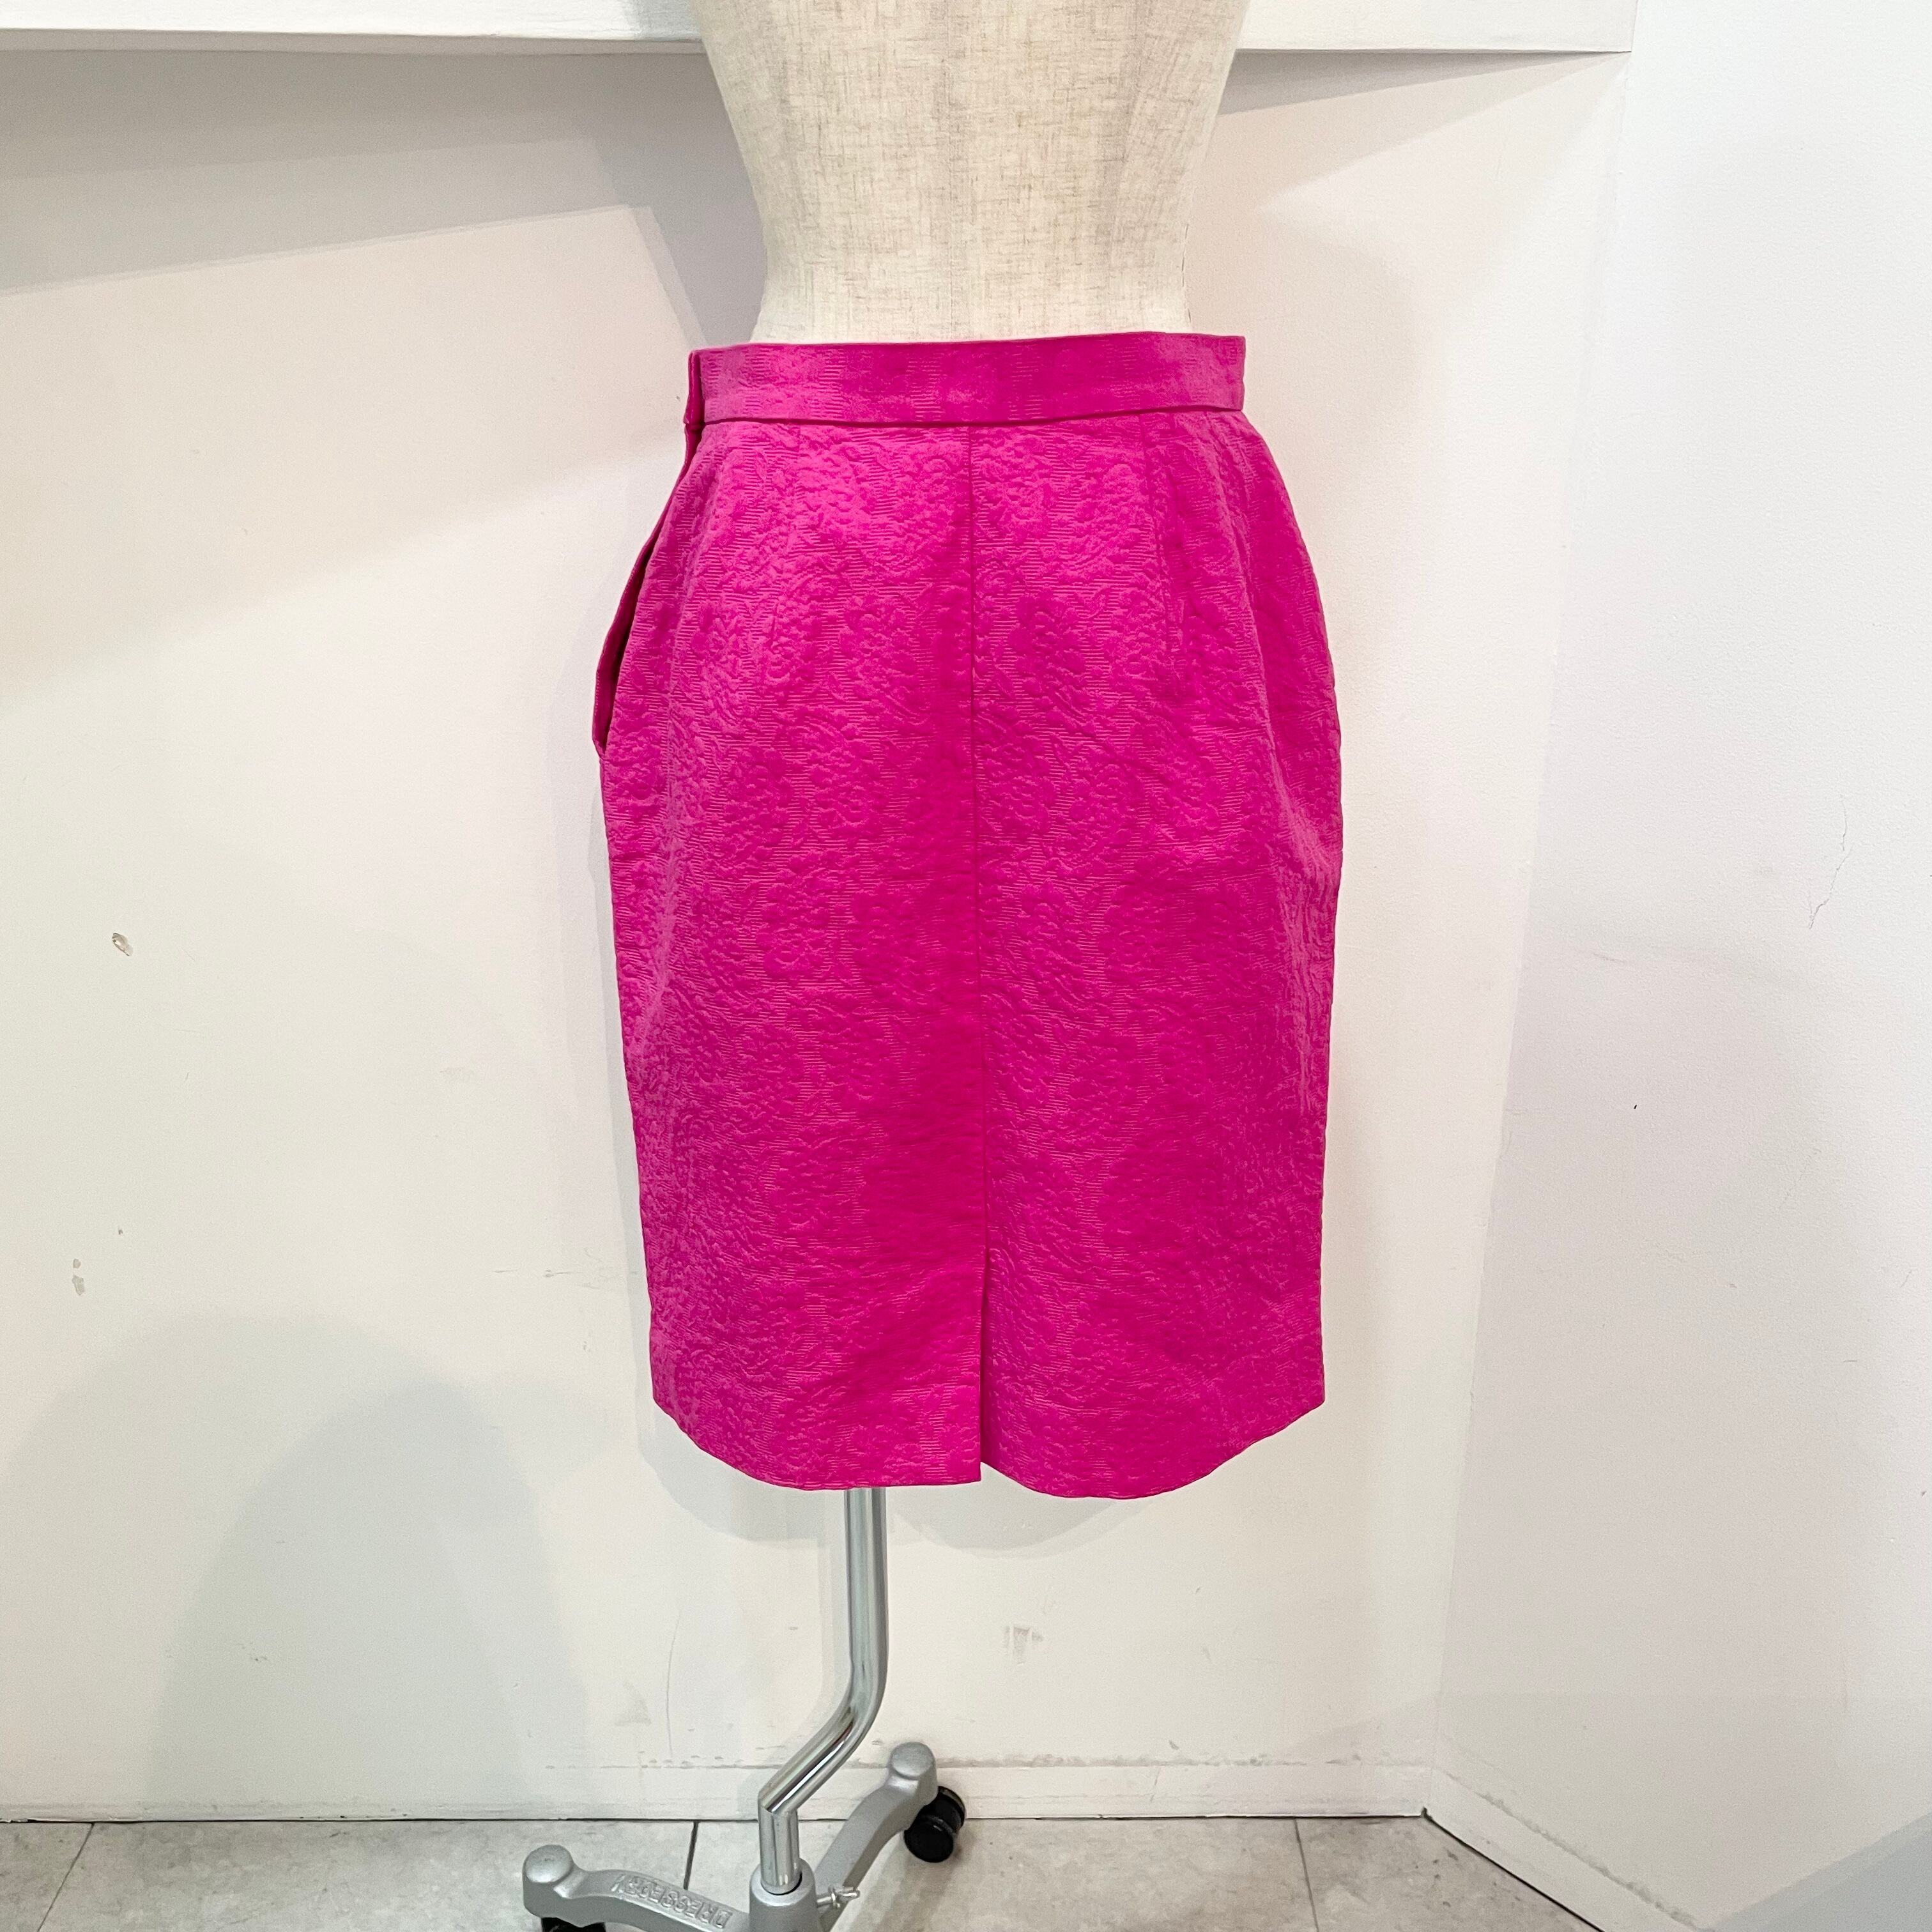 ysl/skirt/pink/mini/イヴサンローラン/スカート/台形スカート/ピンク